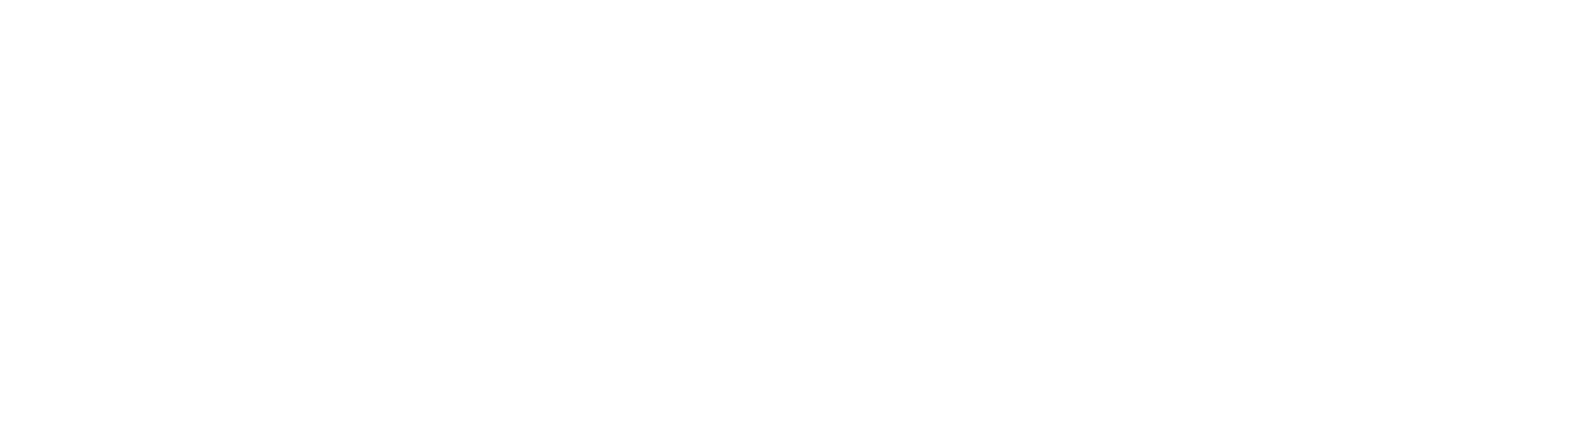 Distell Group Logo groß für dunkle Hintergründe (transparentes PNG)